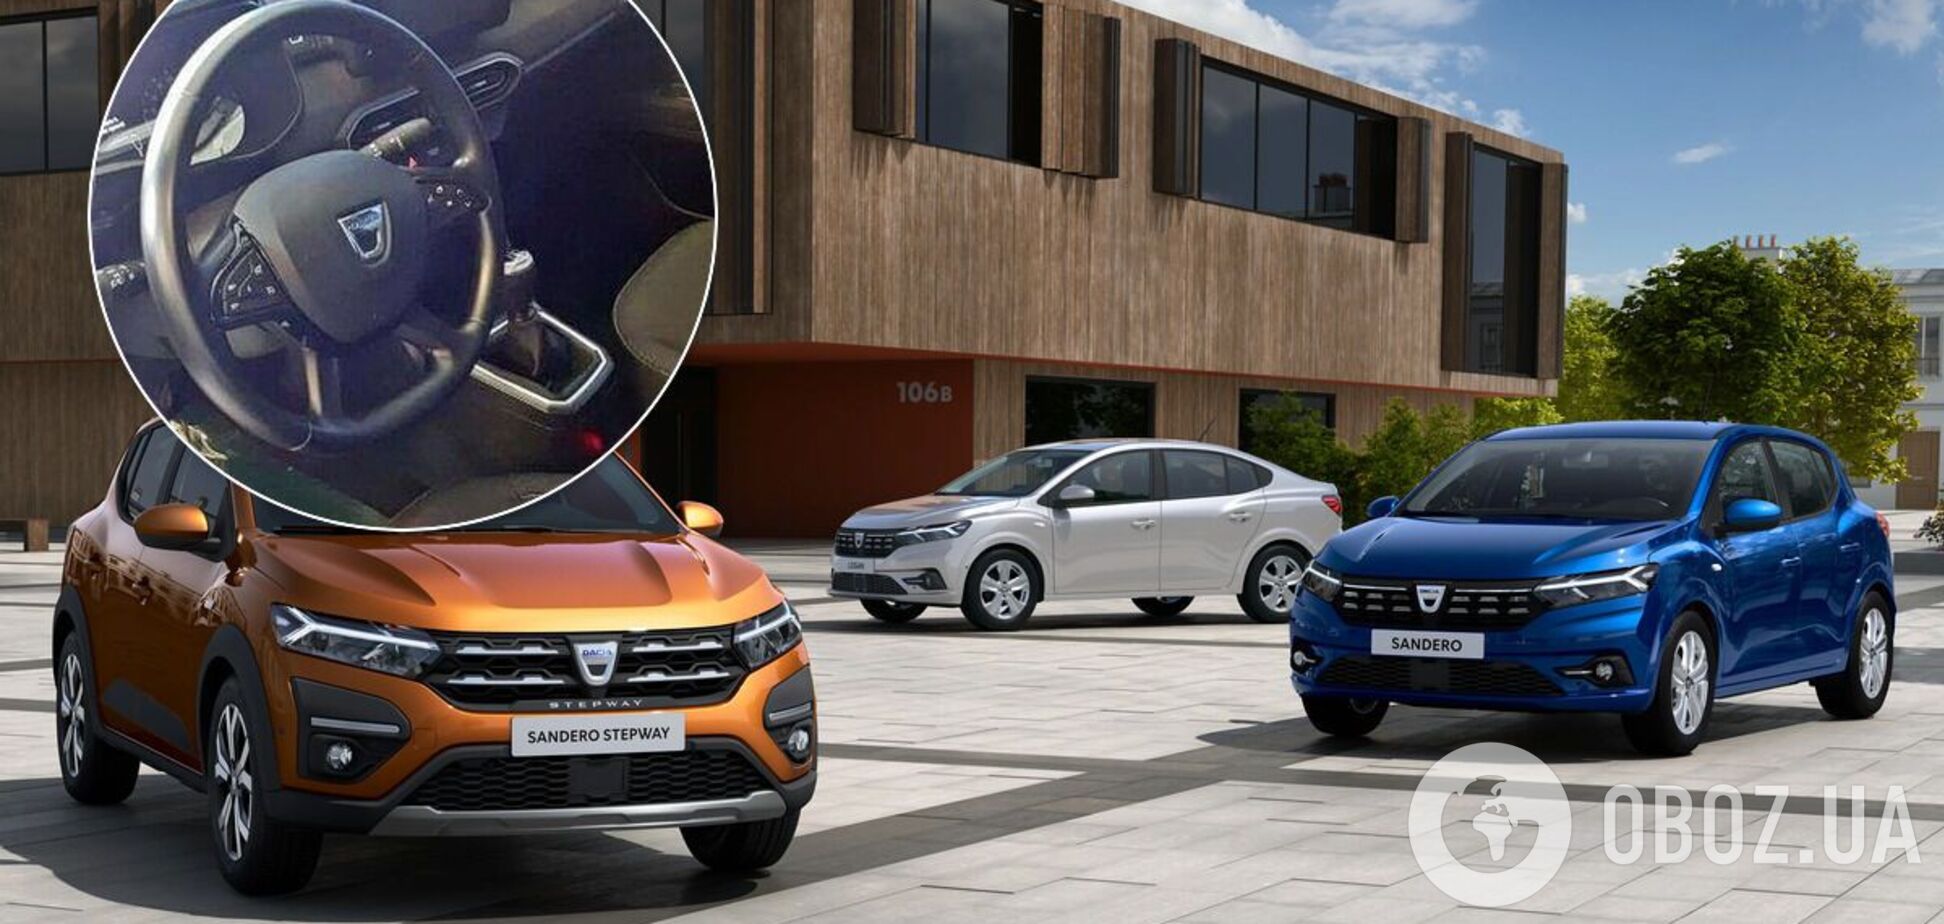 Салон новых Renault Logan и Sandero 2021 рассекретили раньше времени